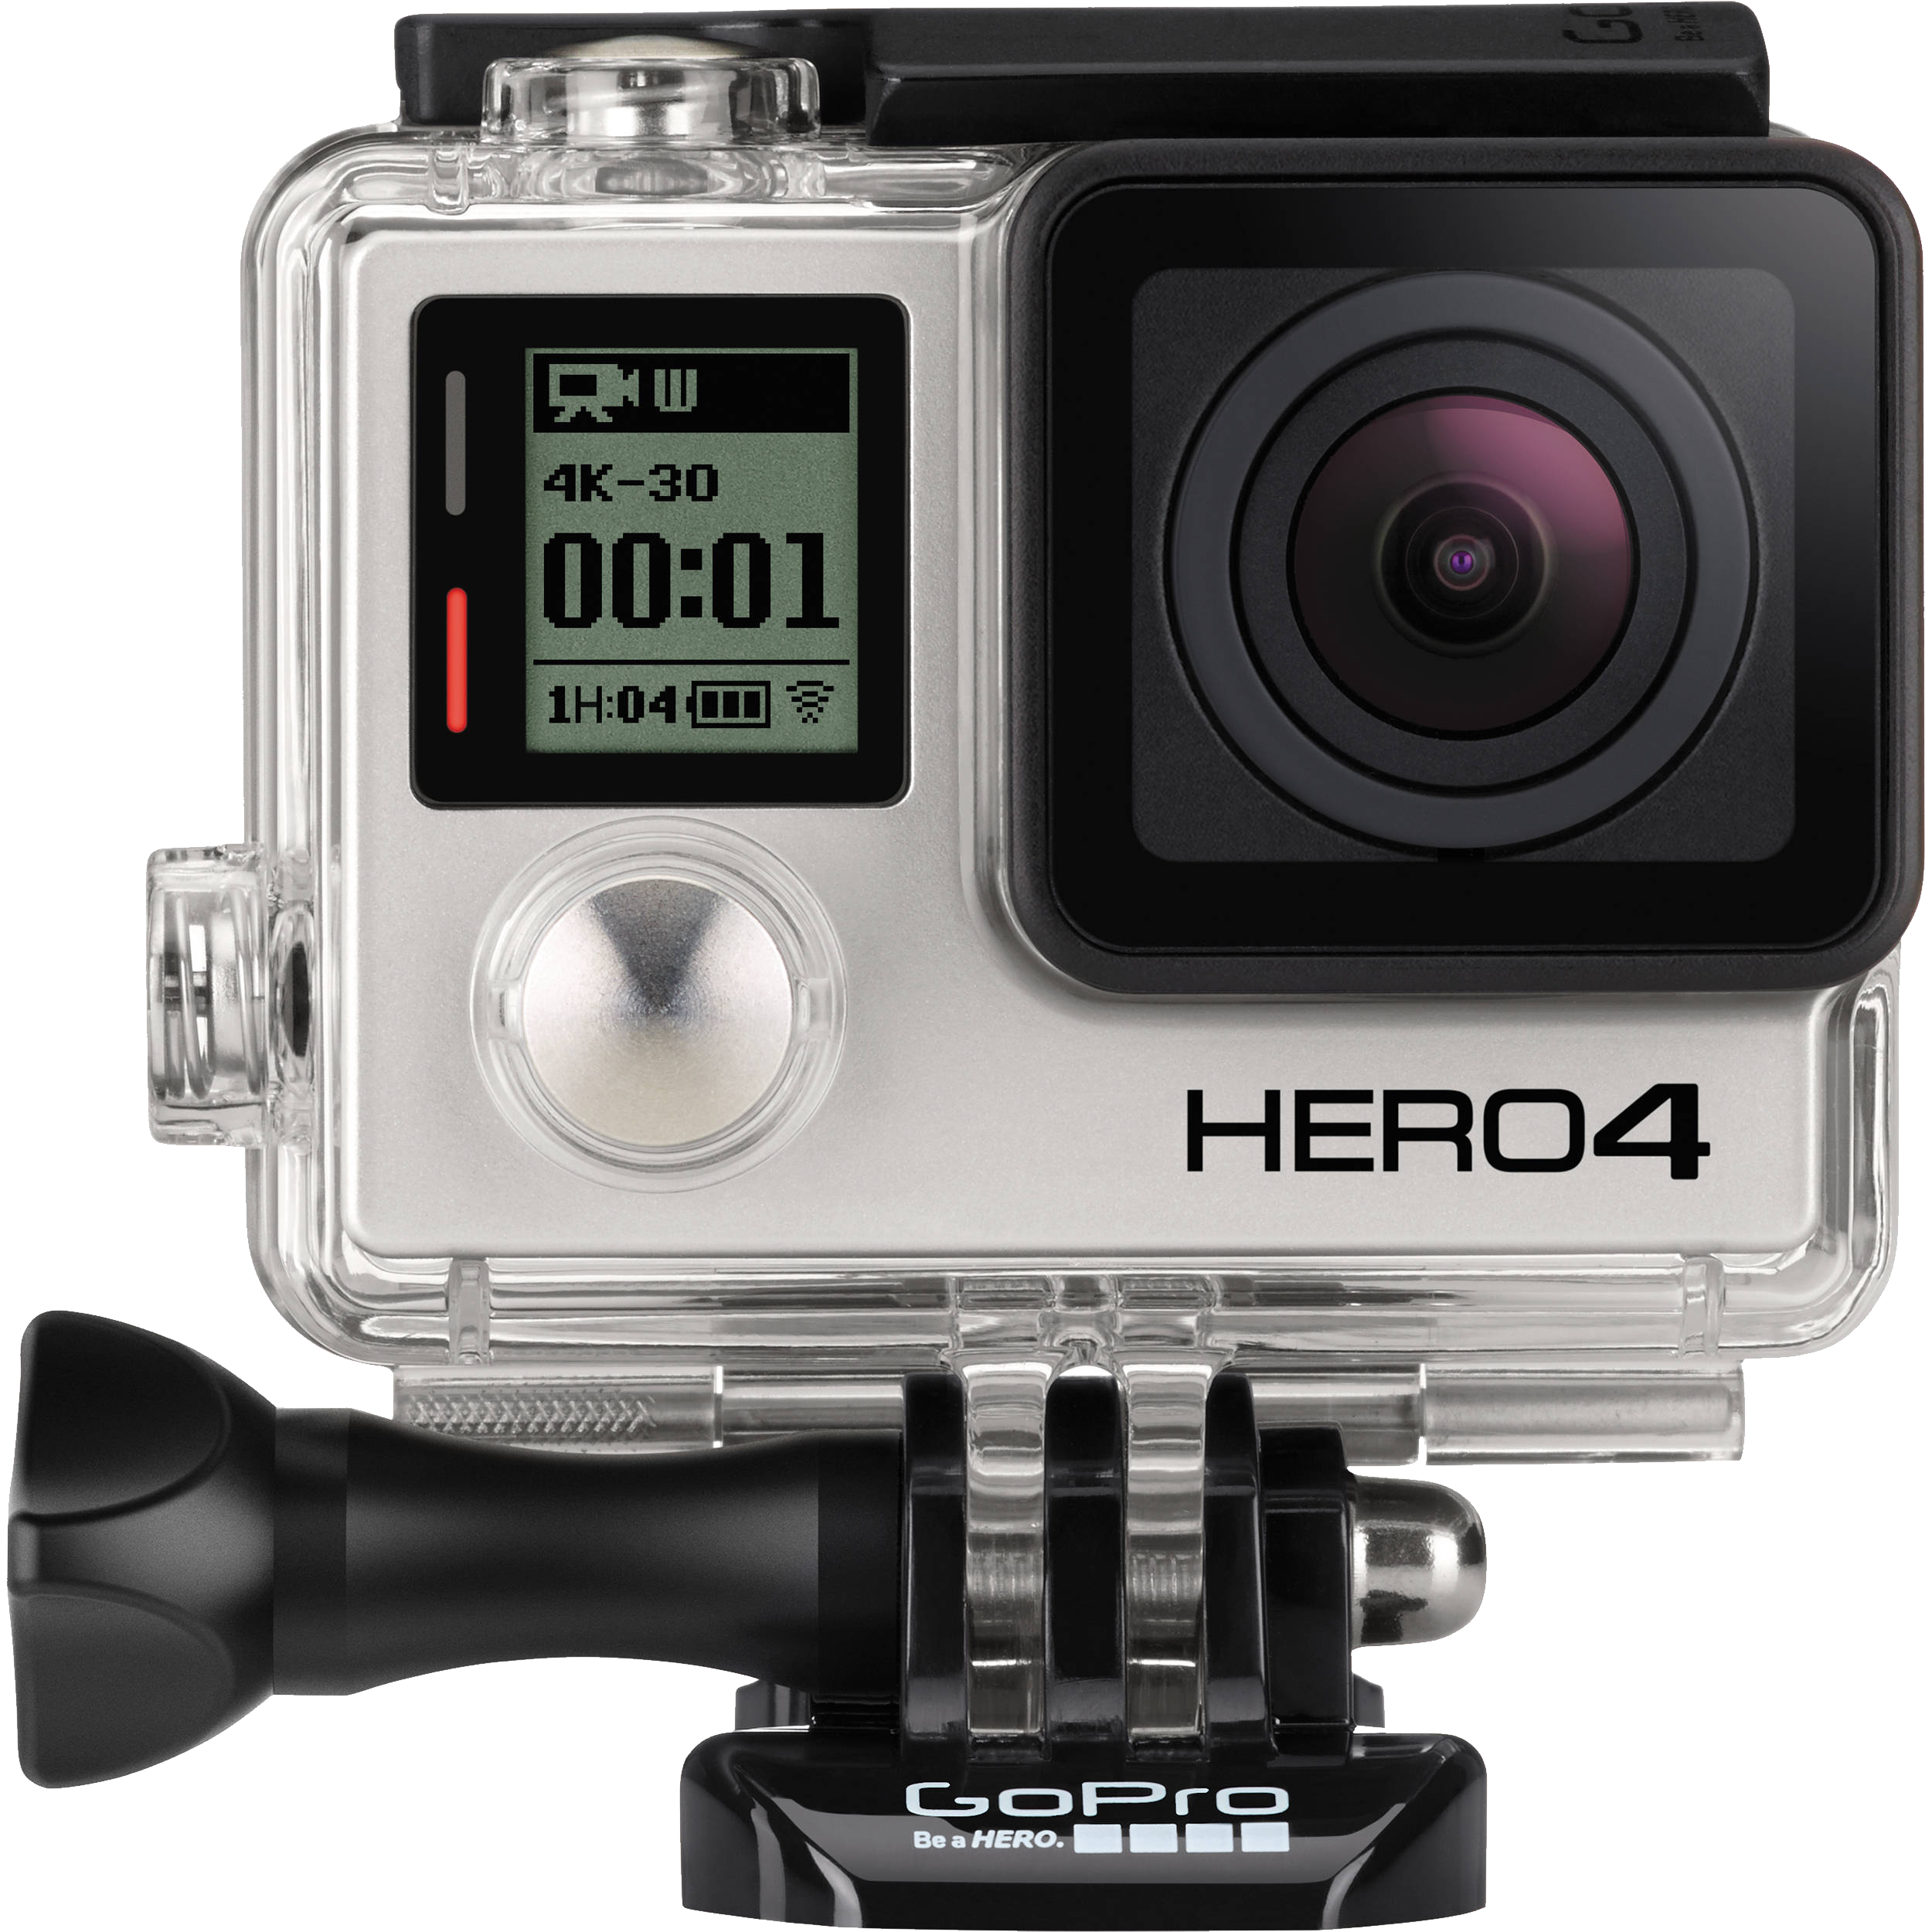 Go for GoPro Hero Camera Rent